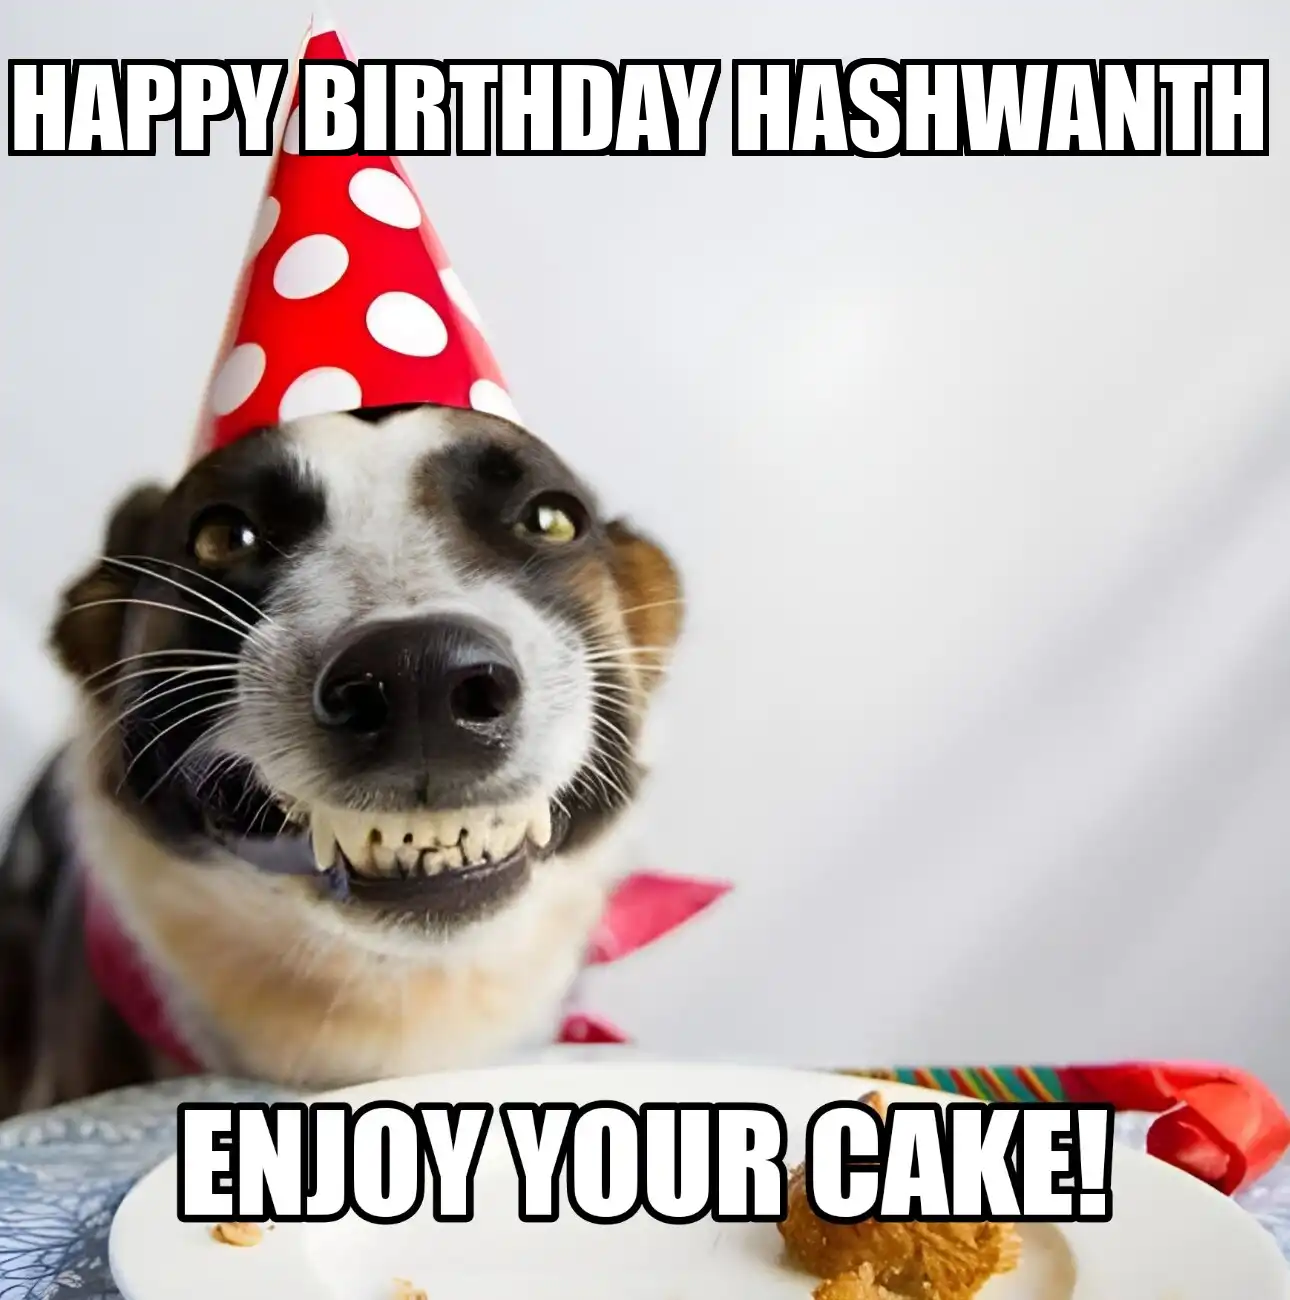 Happy Birthday Hashwanth Enjoy Your Cake Dog Meme